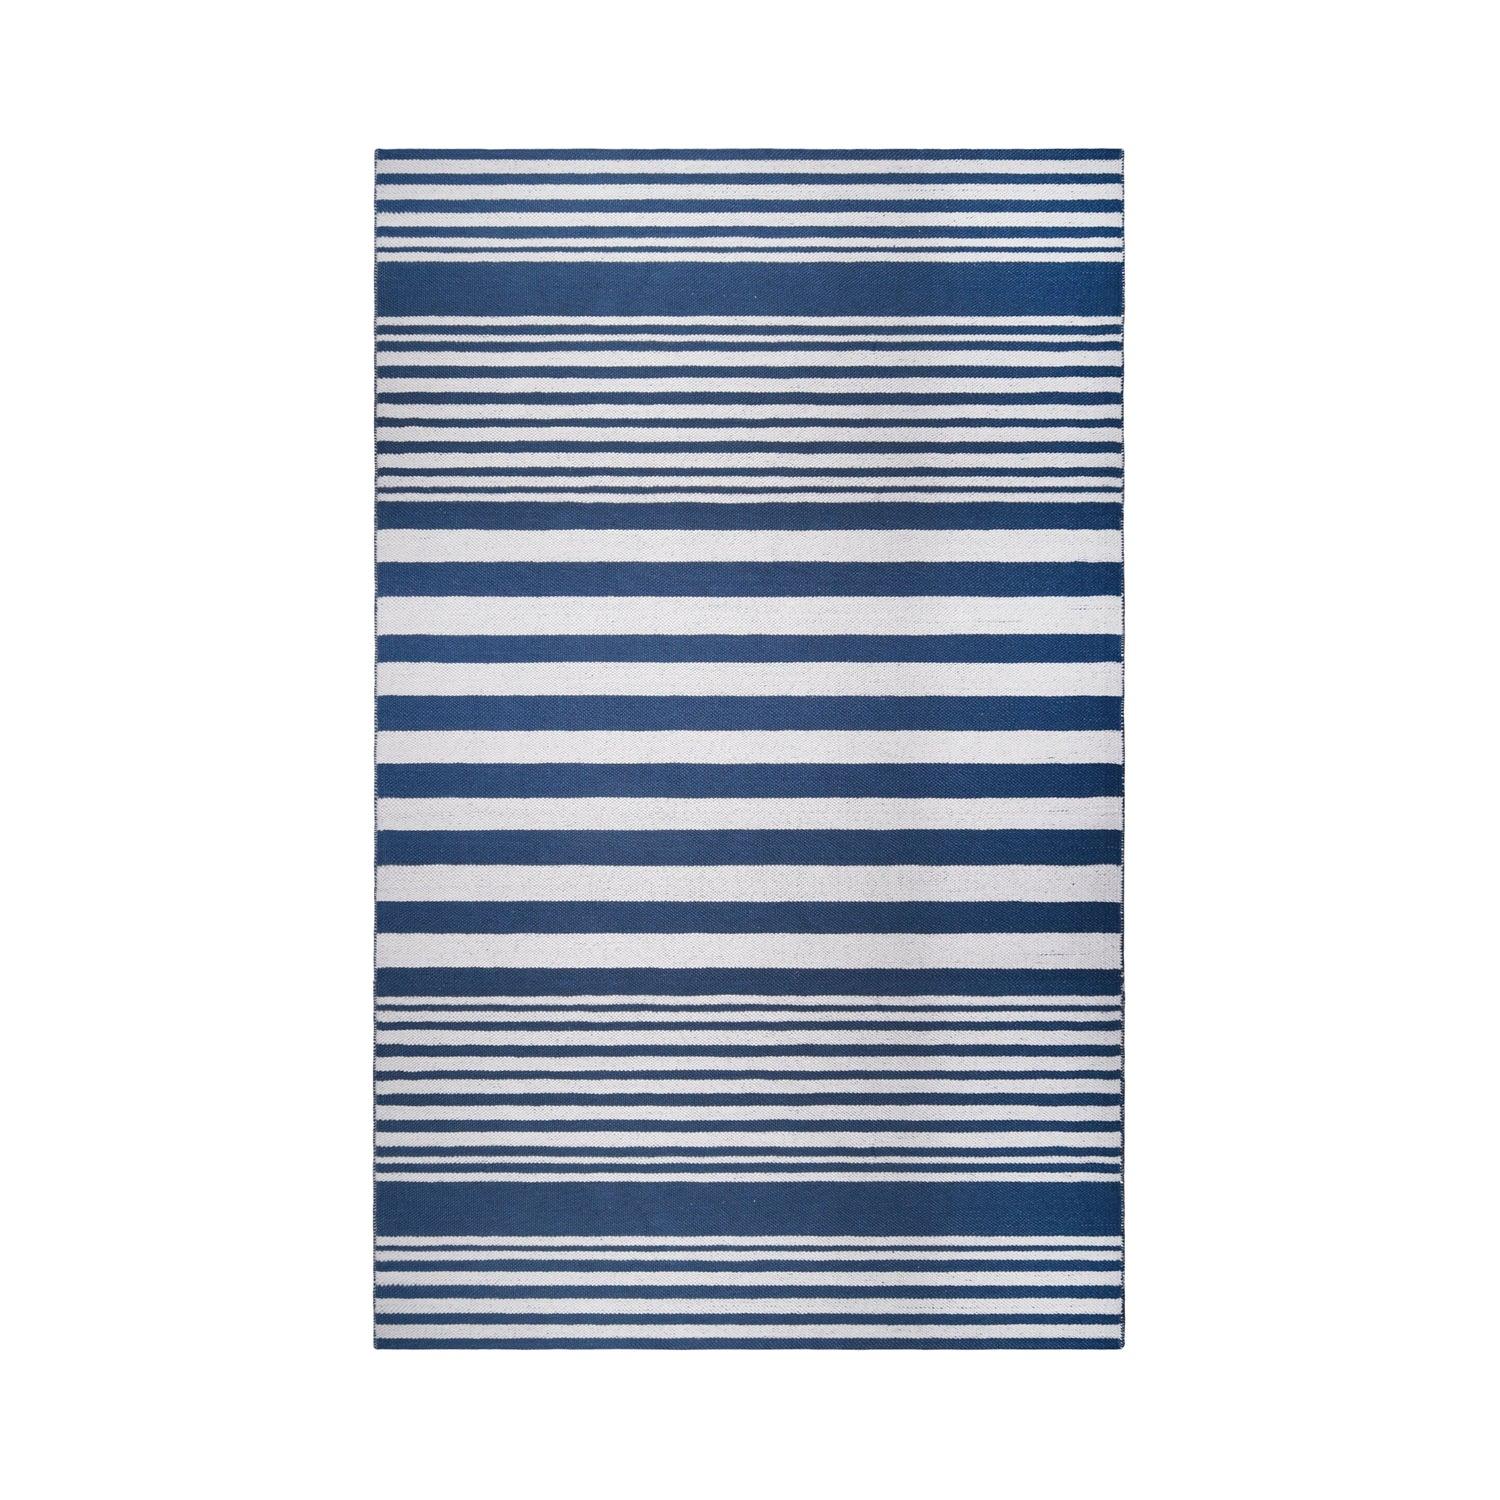  Superior Modern Stripes Large Indoor Outdoor Pattern Area Rug - Navy Blue